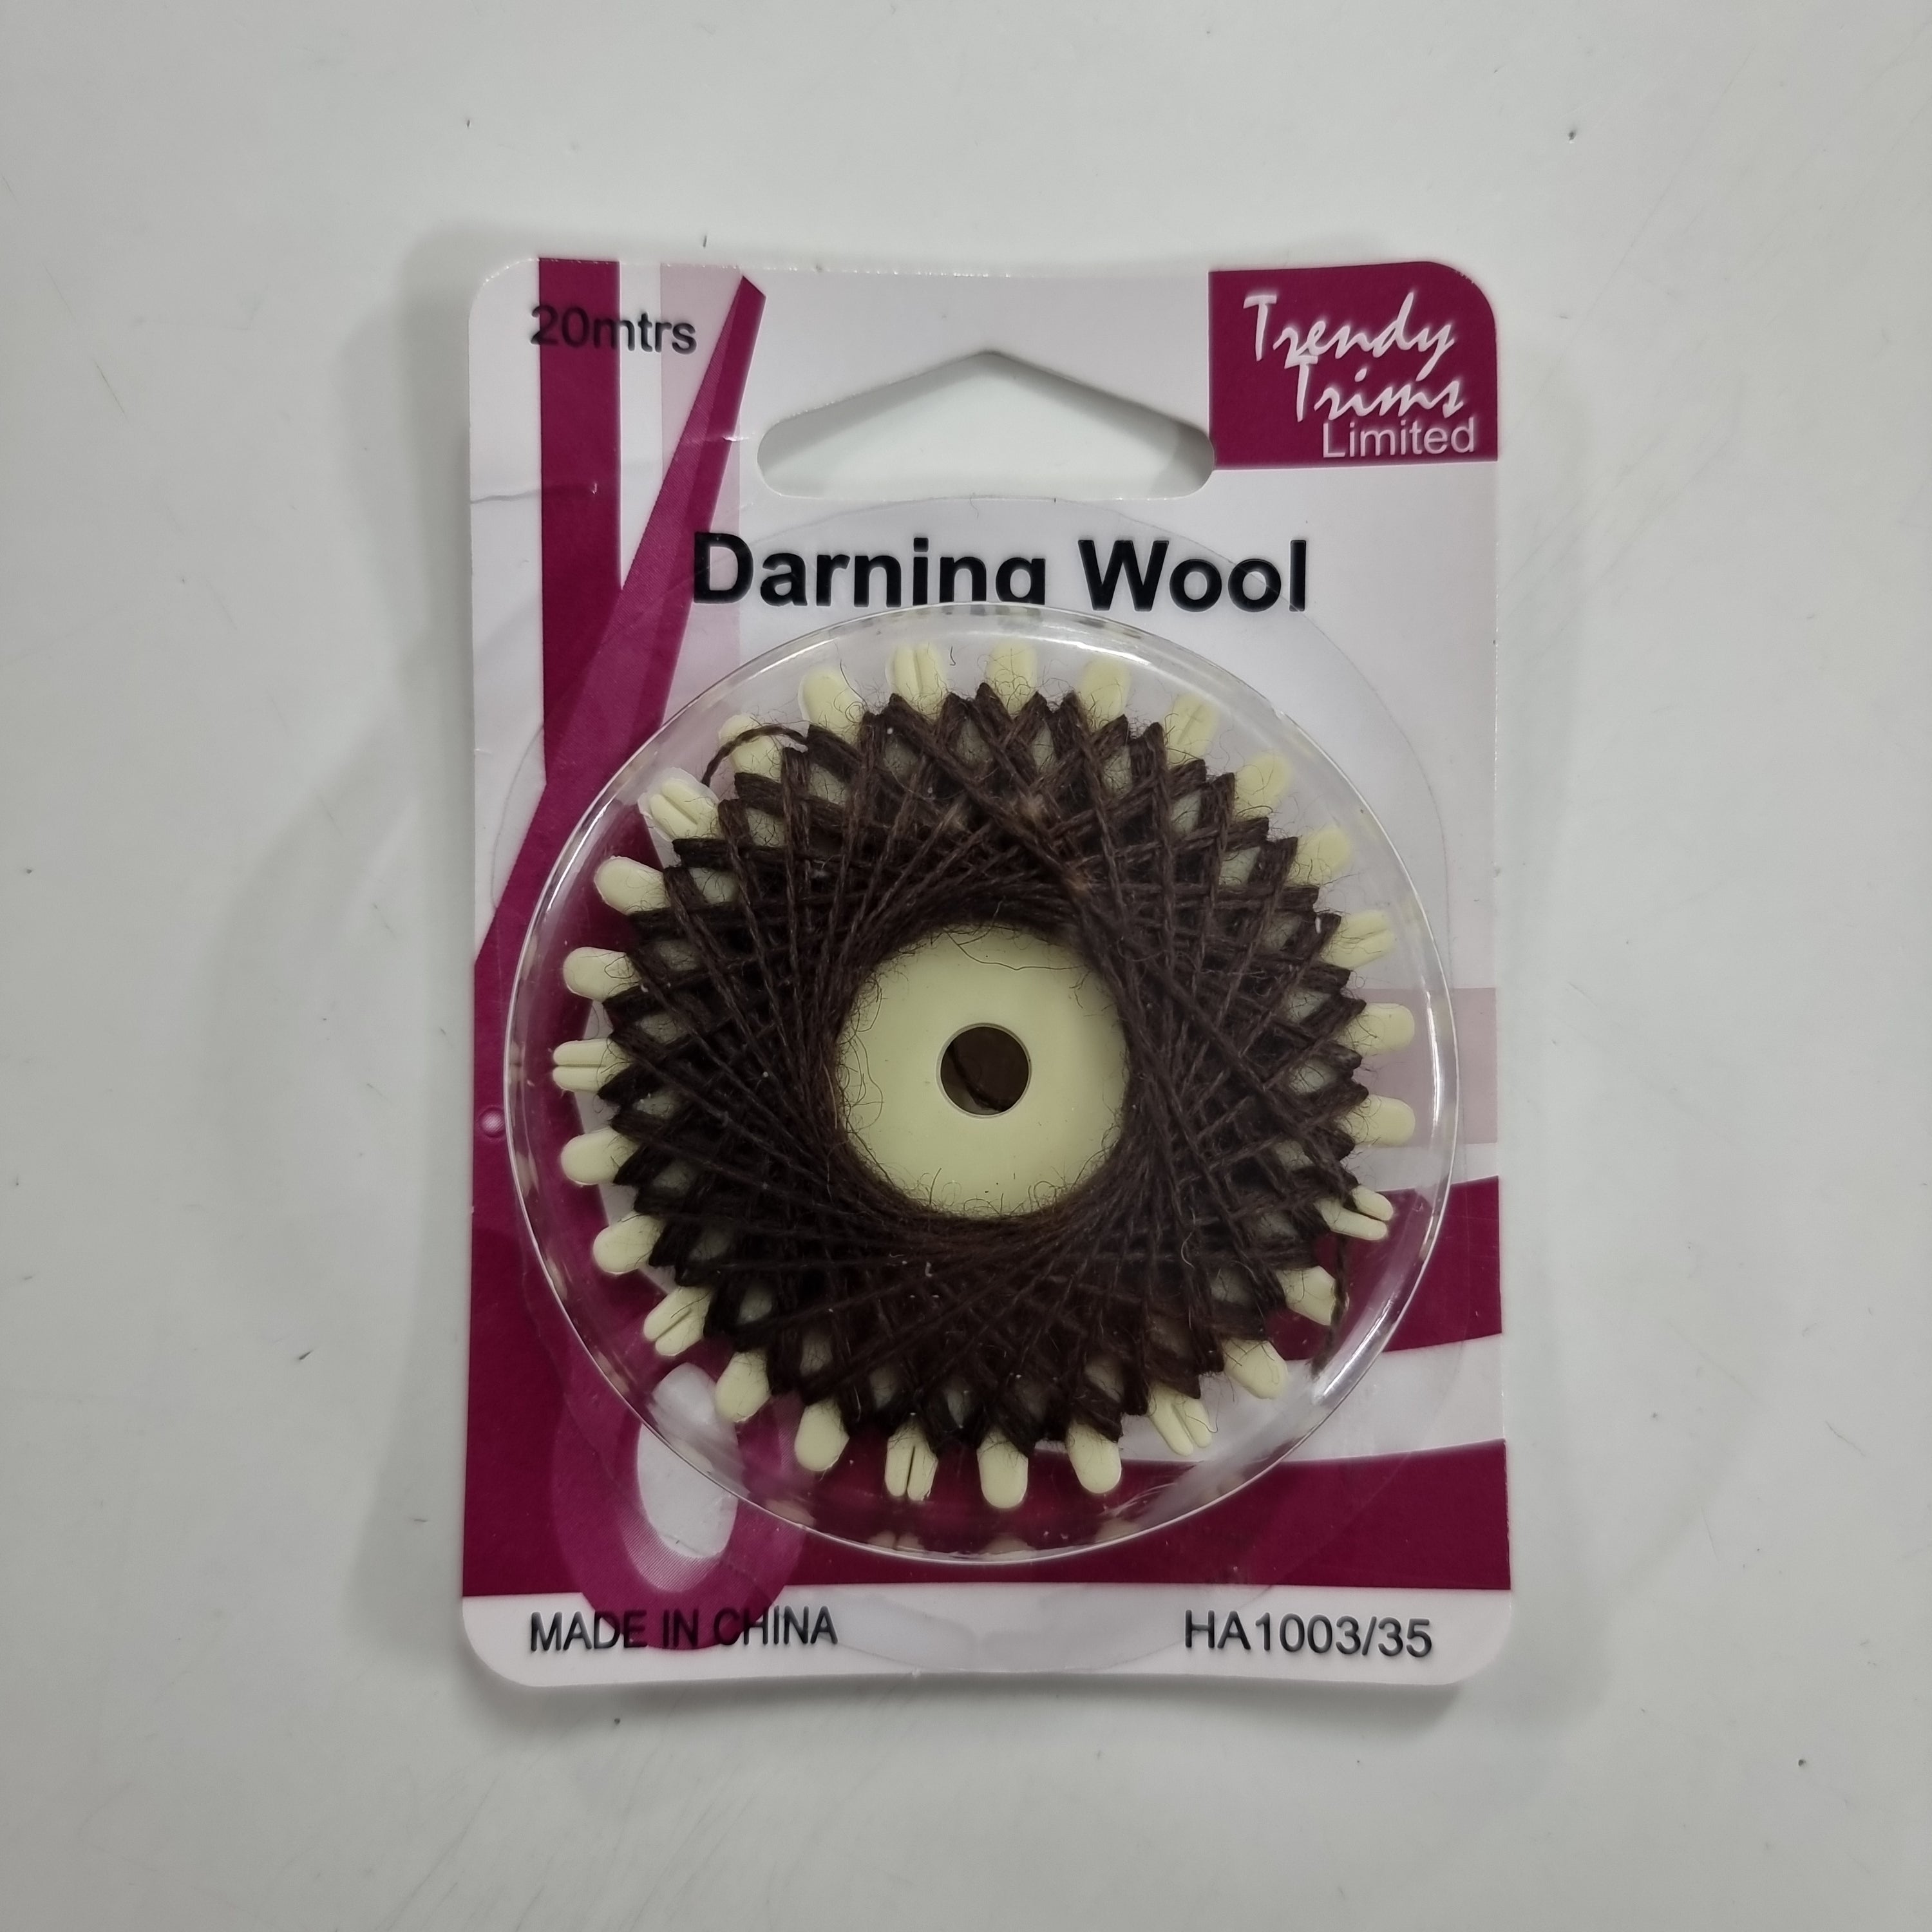 Darning Wool - Brown